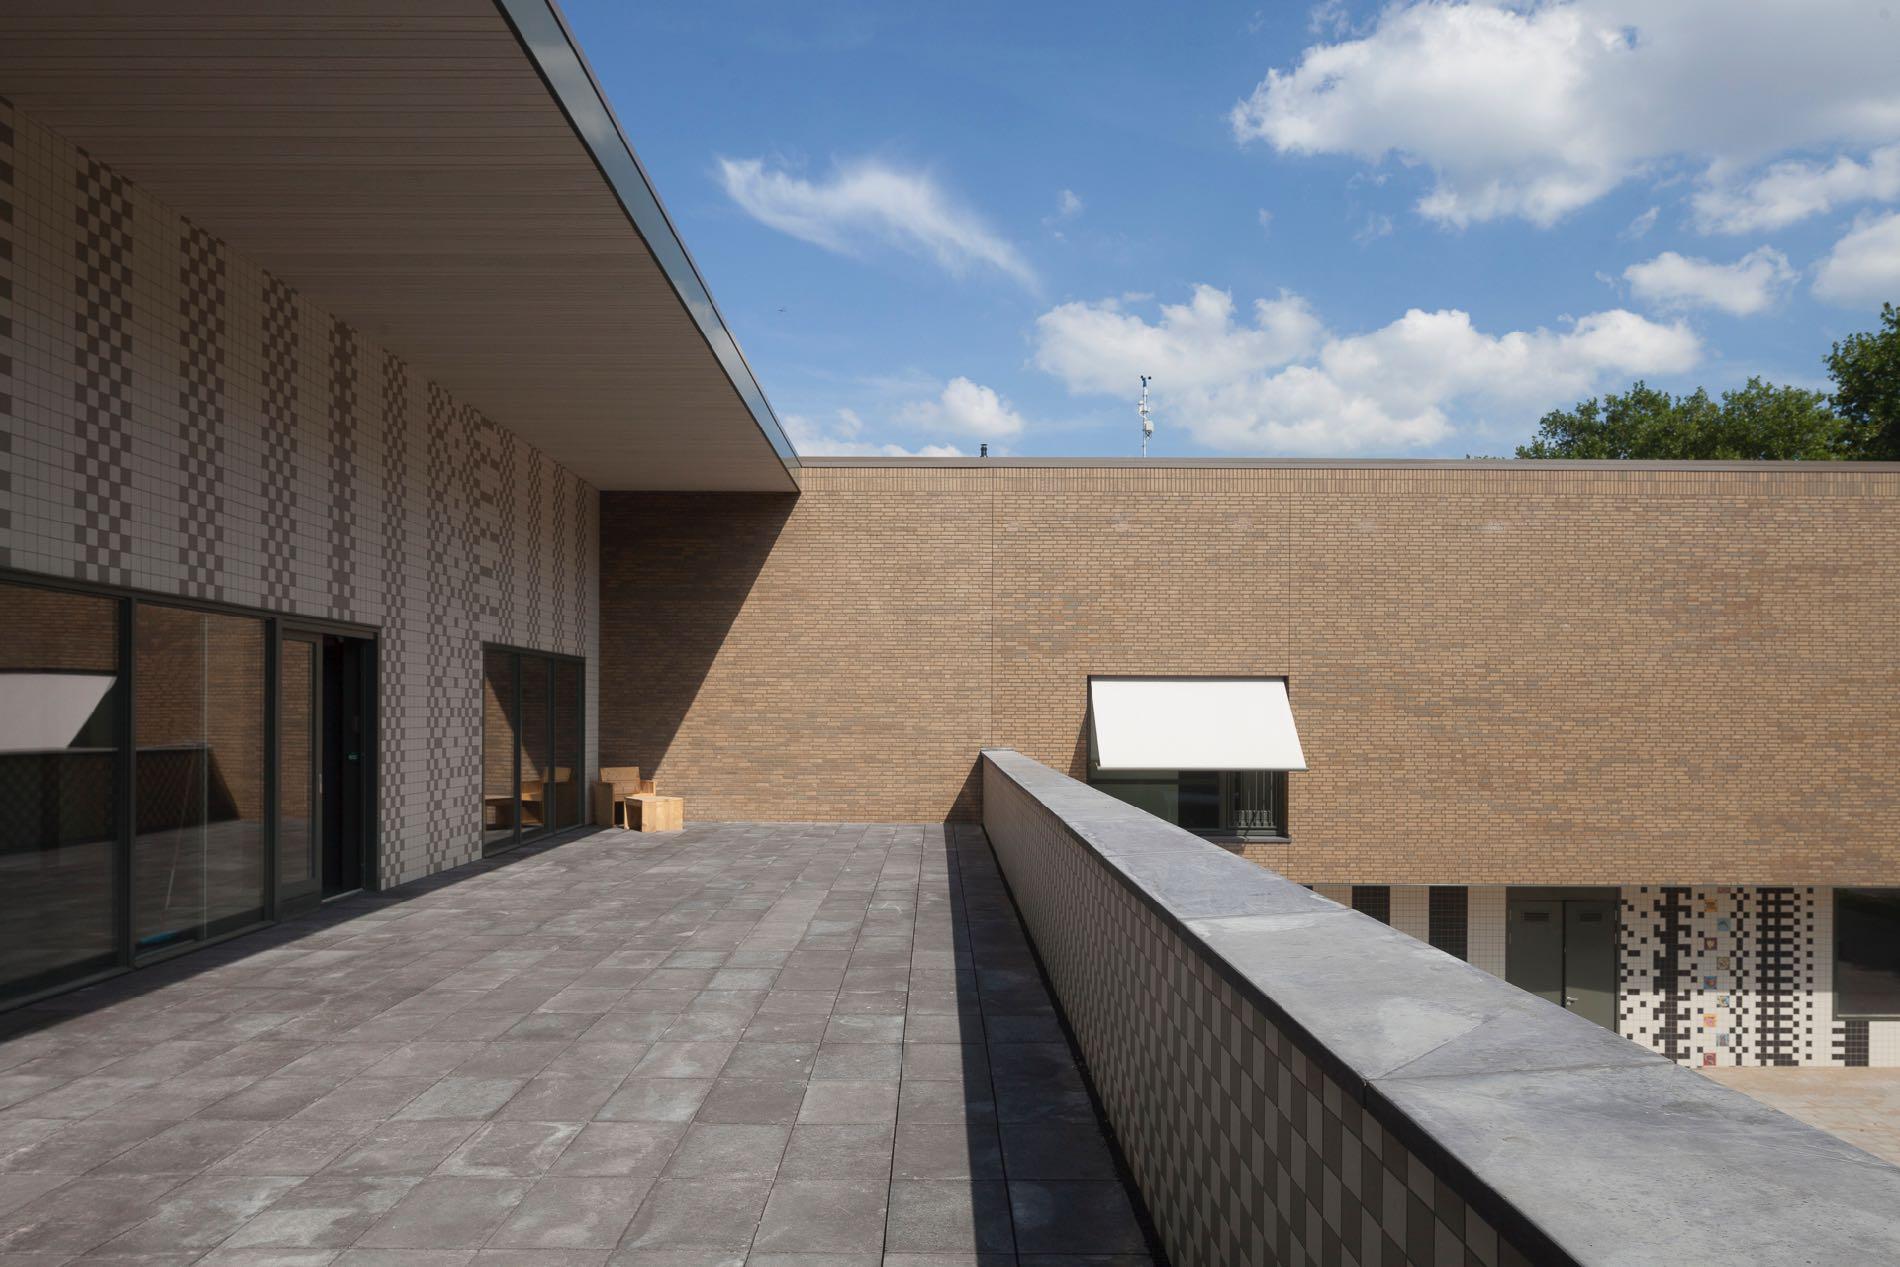 A.J. Schreuderschool, Rotterdam - Korteknie Stuhlmacher Architecten 2a